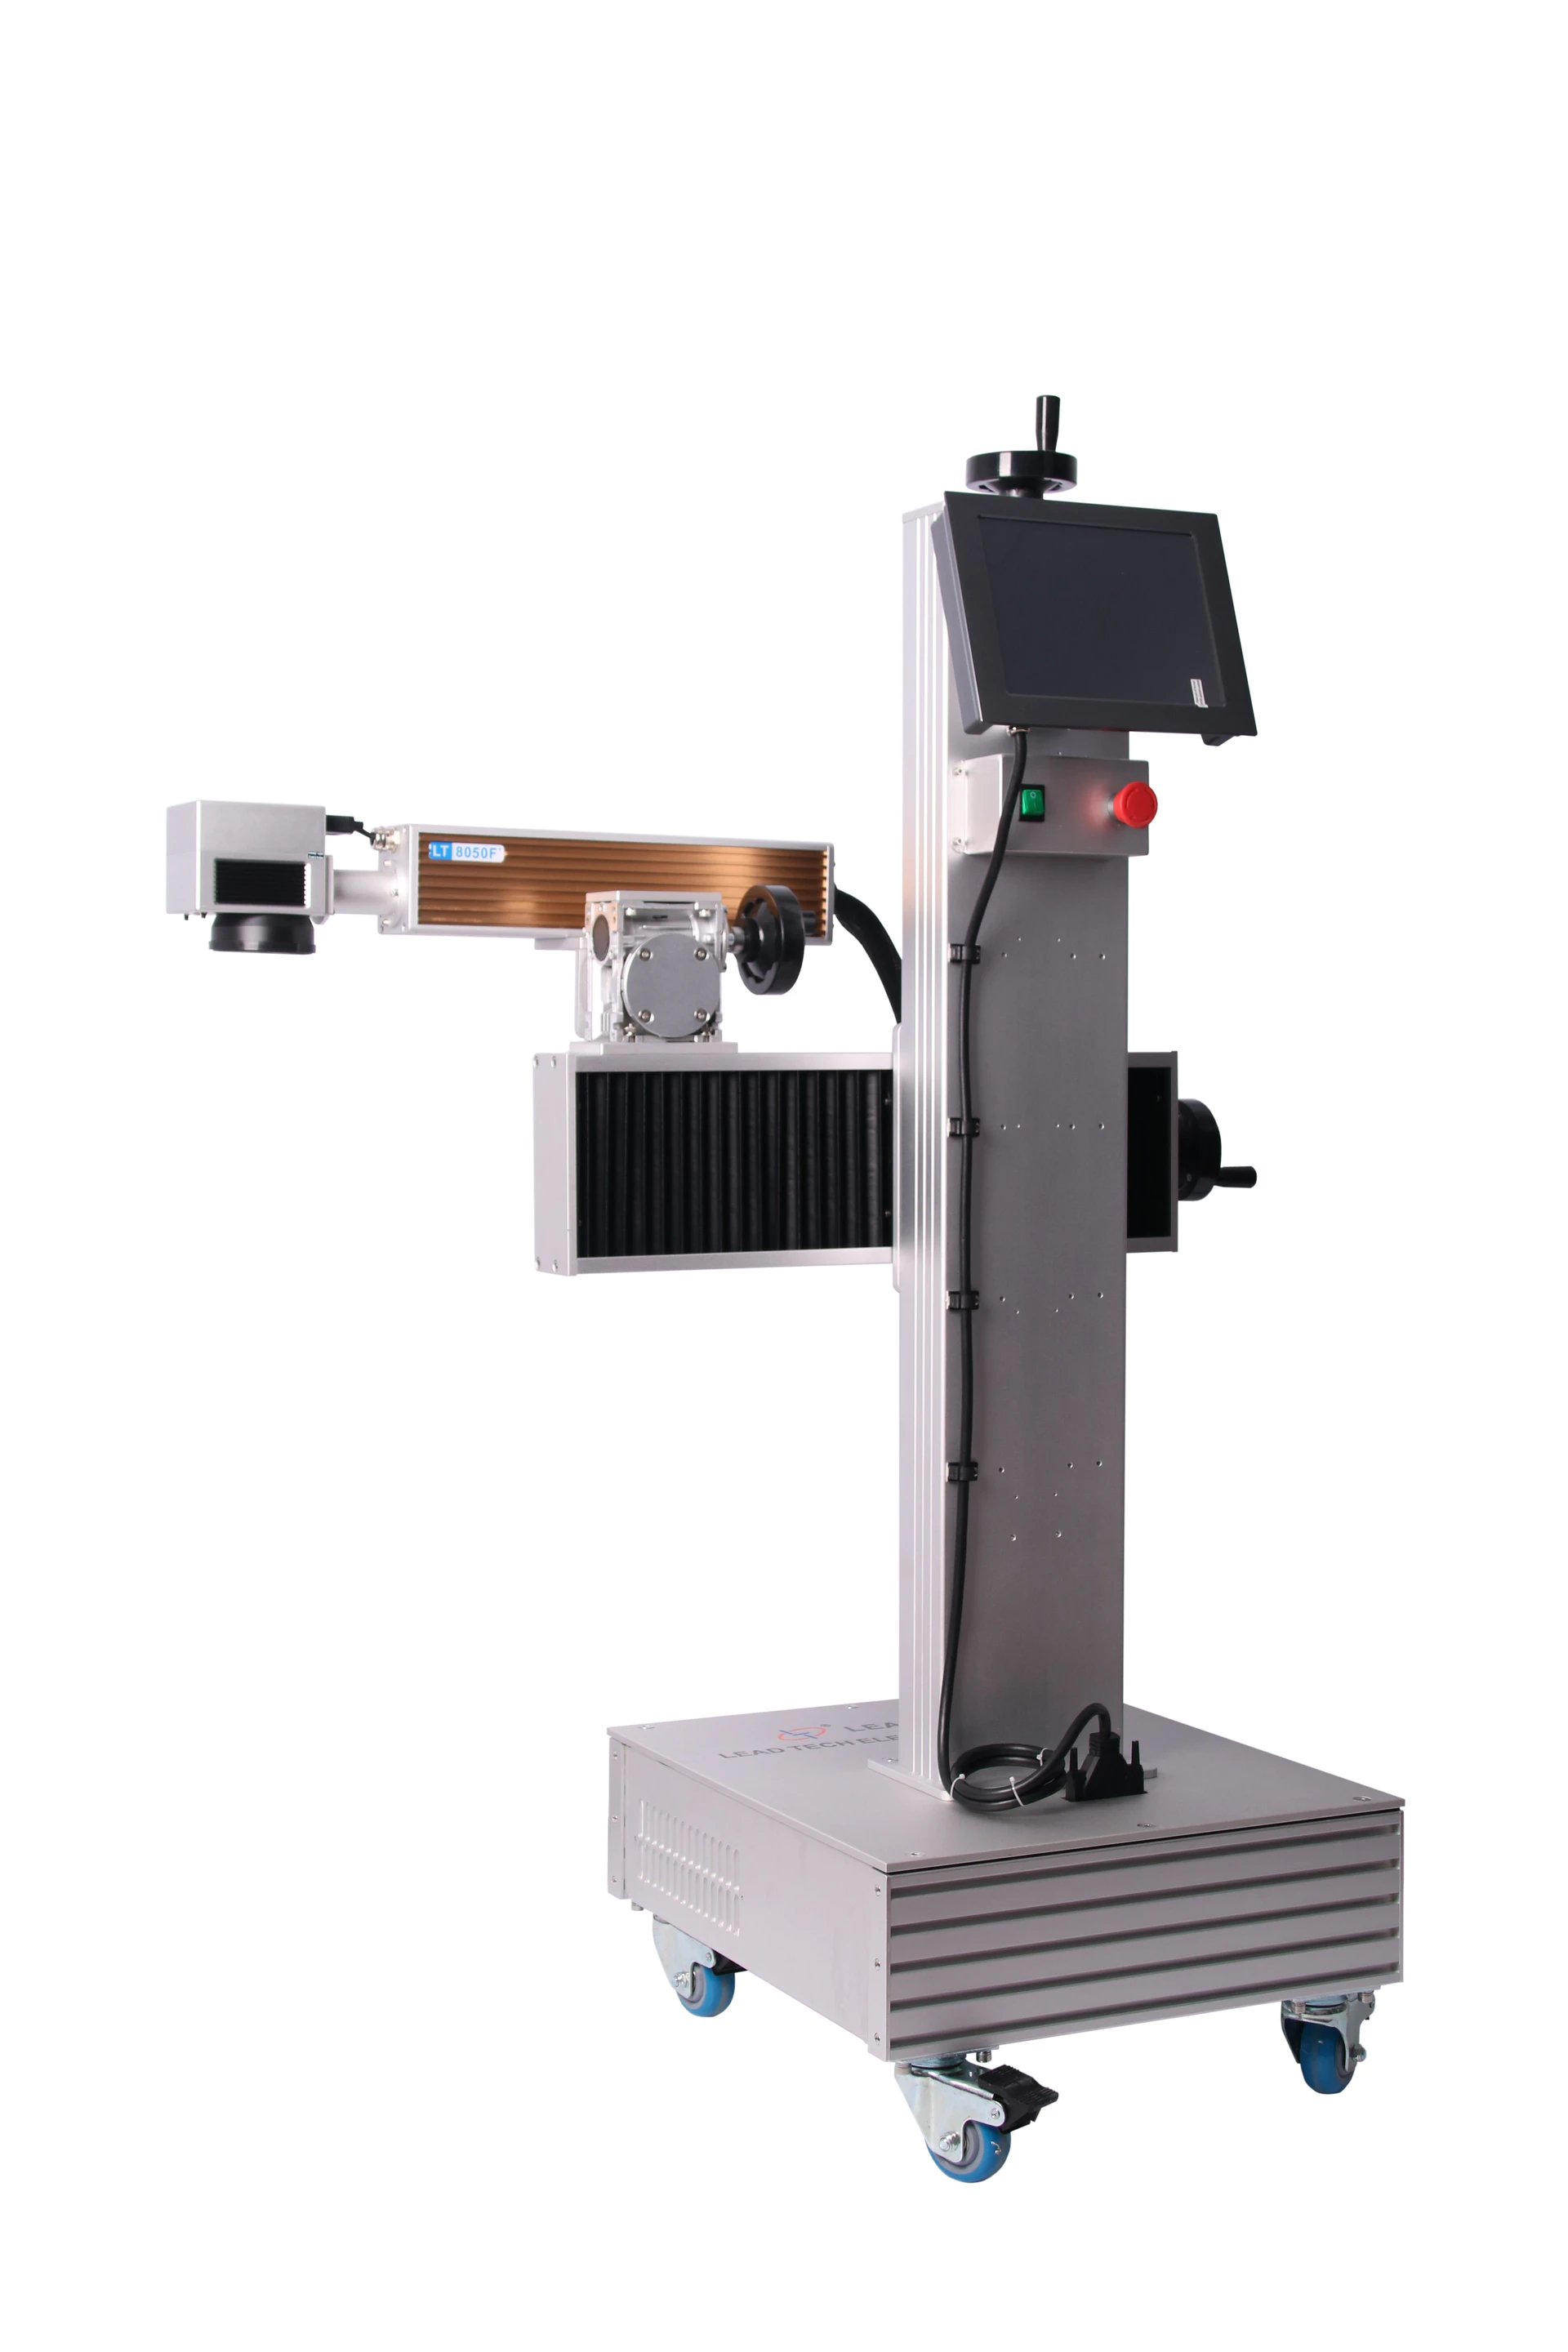 Lt8020f/Lt8030f/Lt8050f Fiber High Performance Digital Laser Marking Printer for Stainless Steel Metal